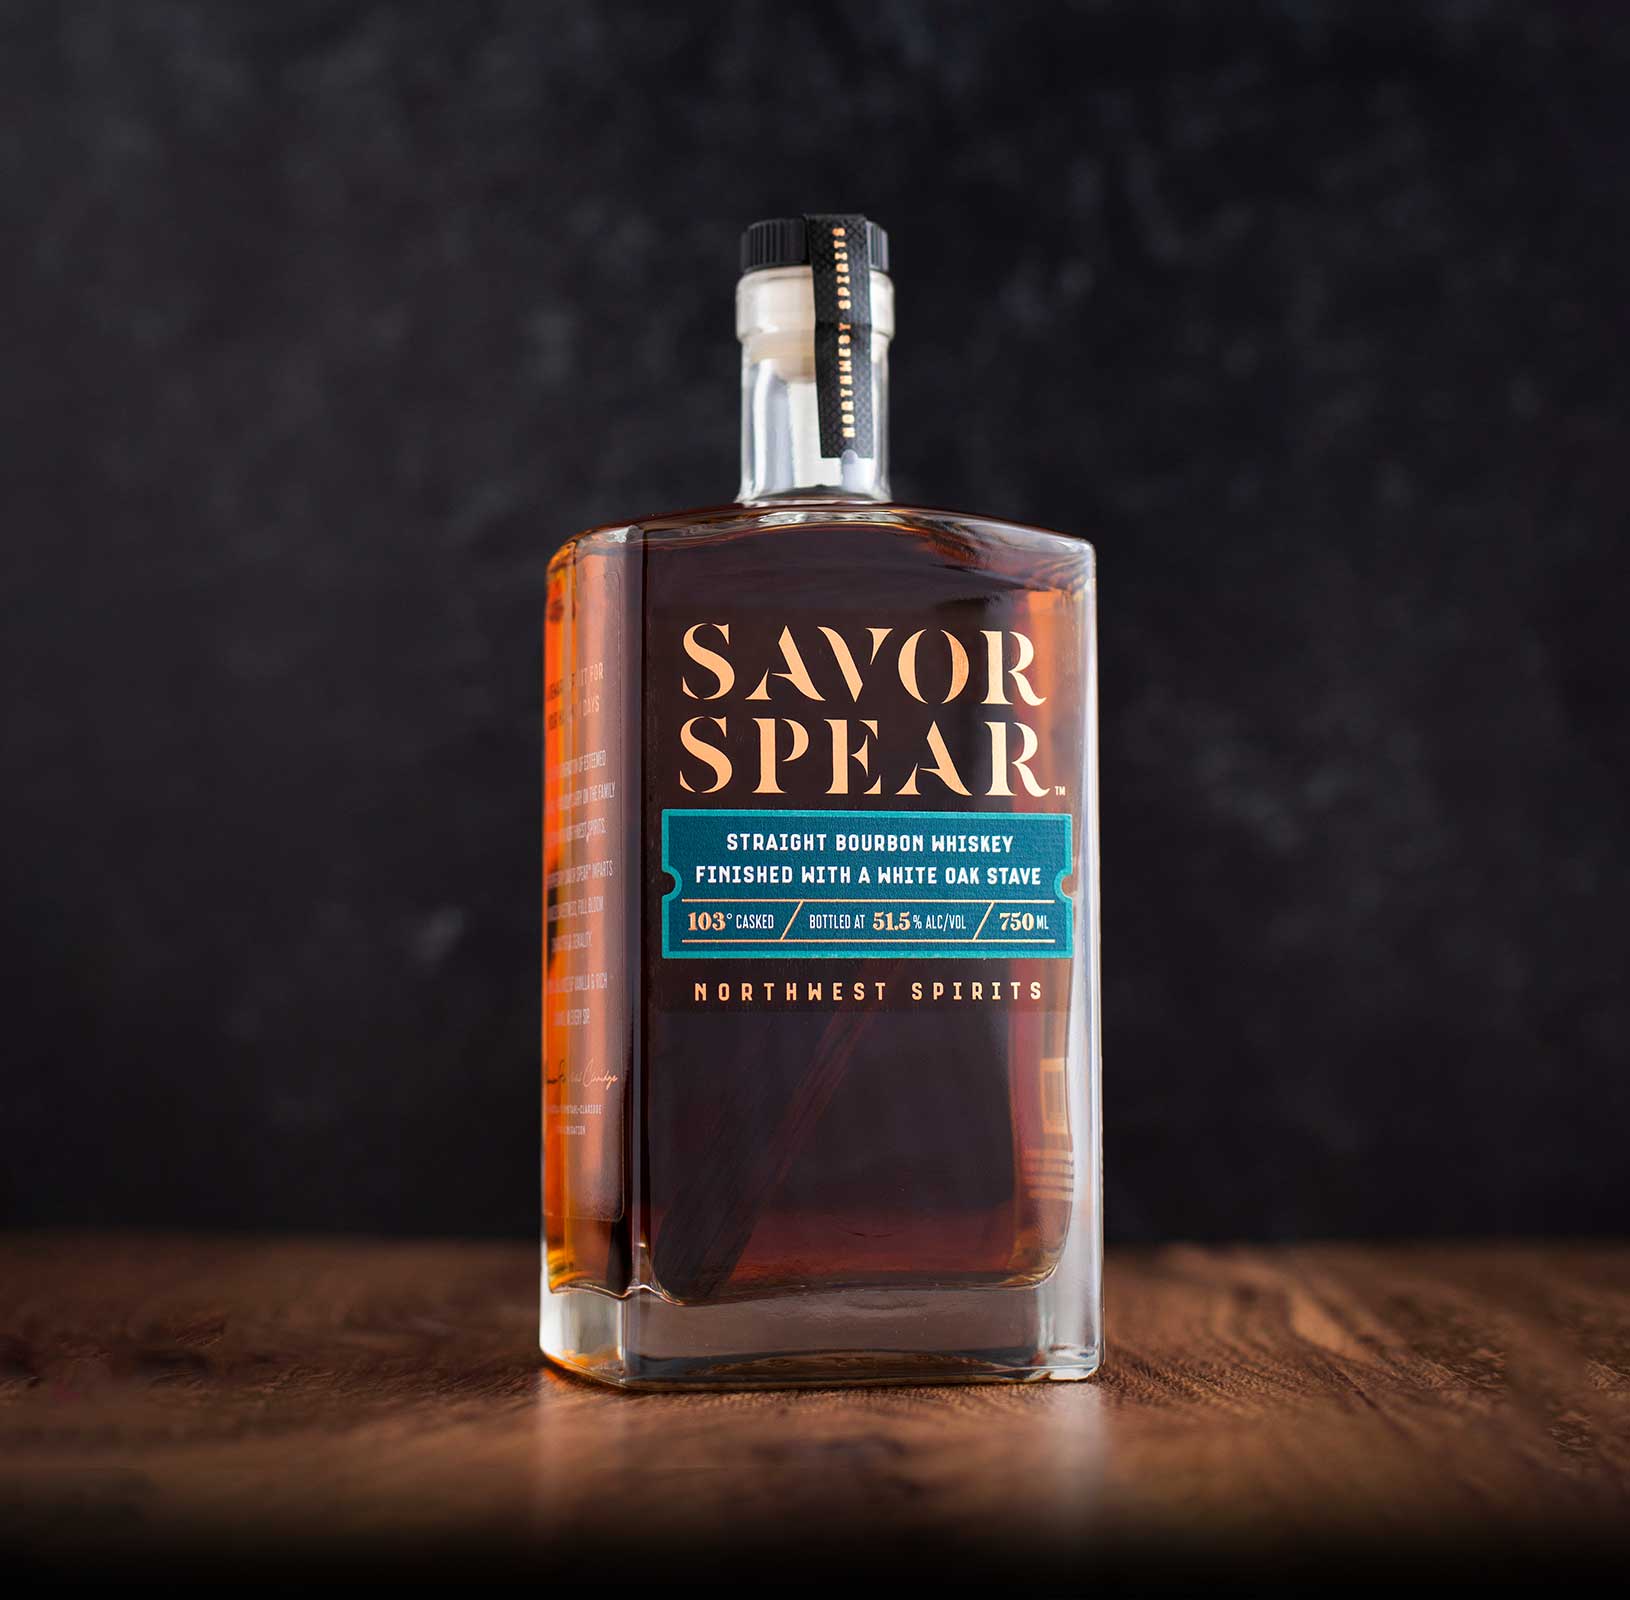 Savor Spear Straight Bourbon Whiskey